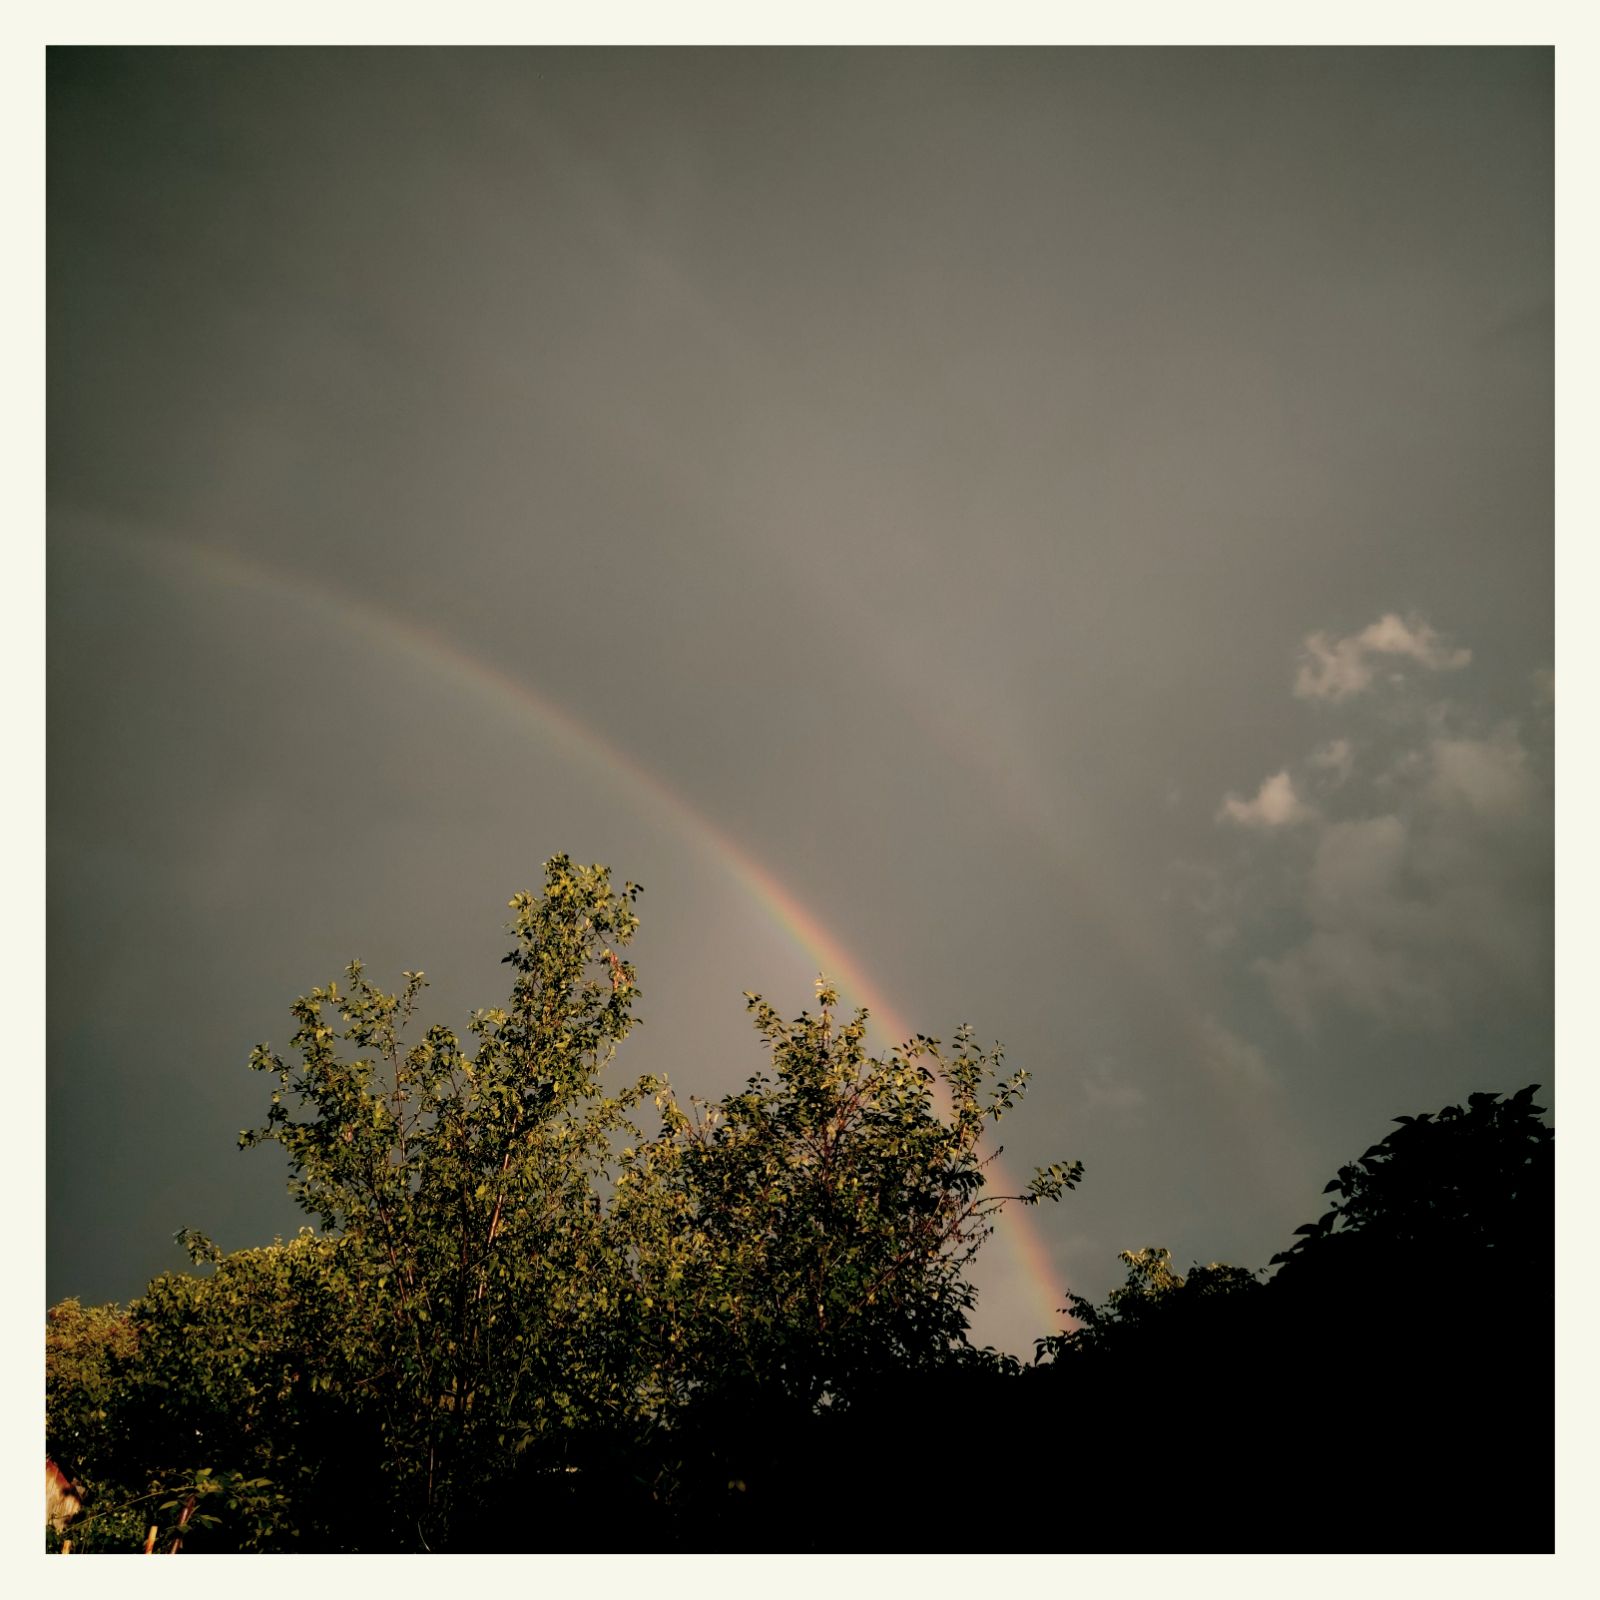 A rainbow in dark skies. After the rain.